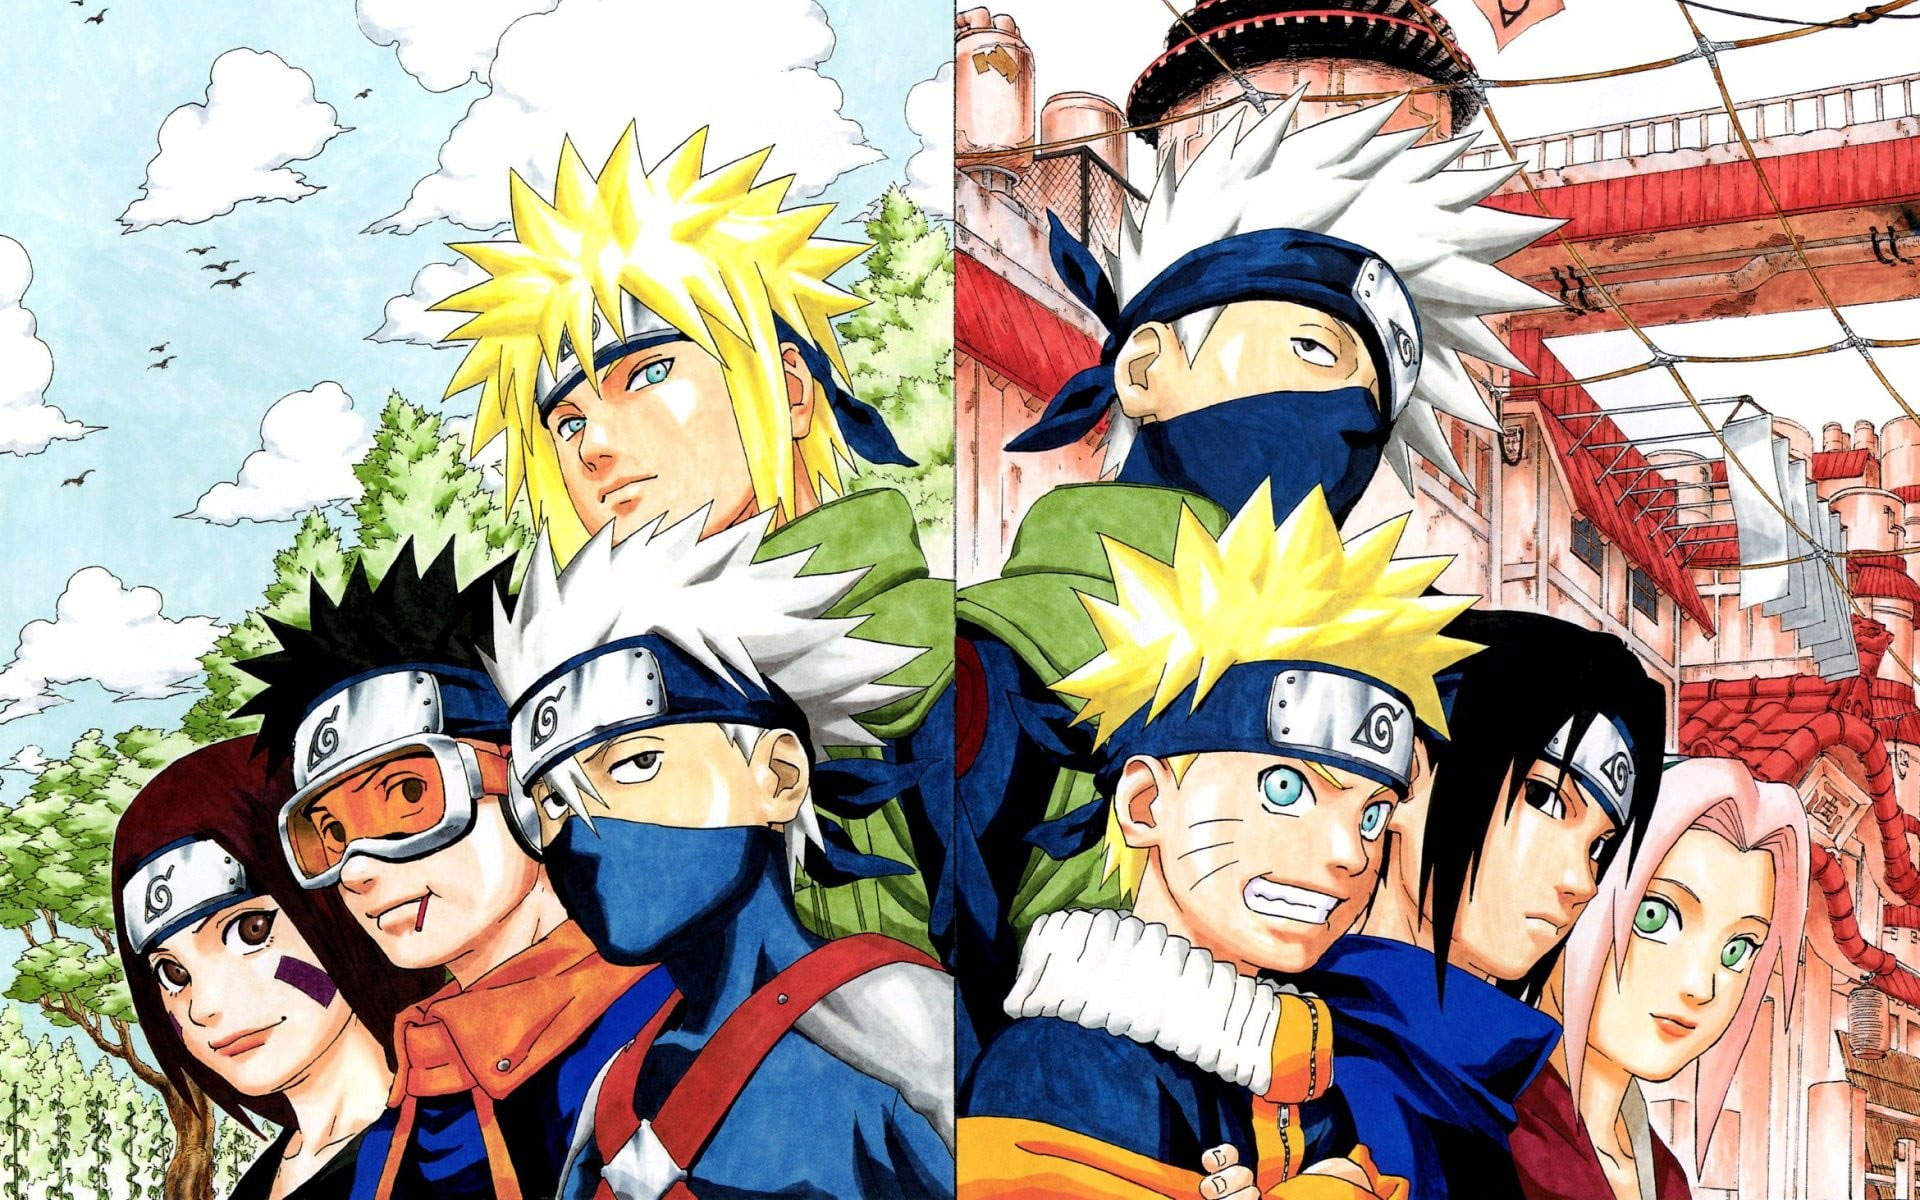 Wallpaper Naruto Characters Collage, Naruto Shippuden